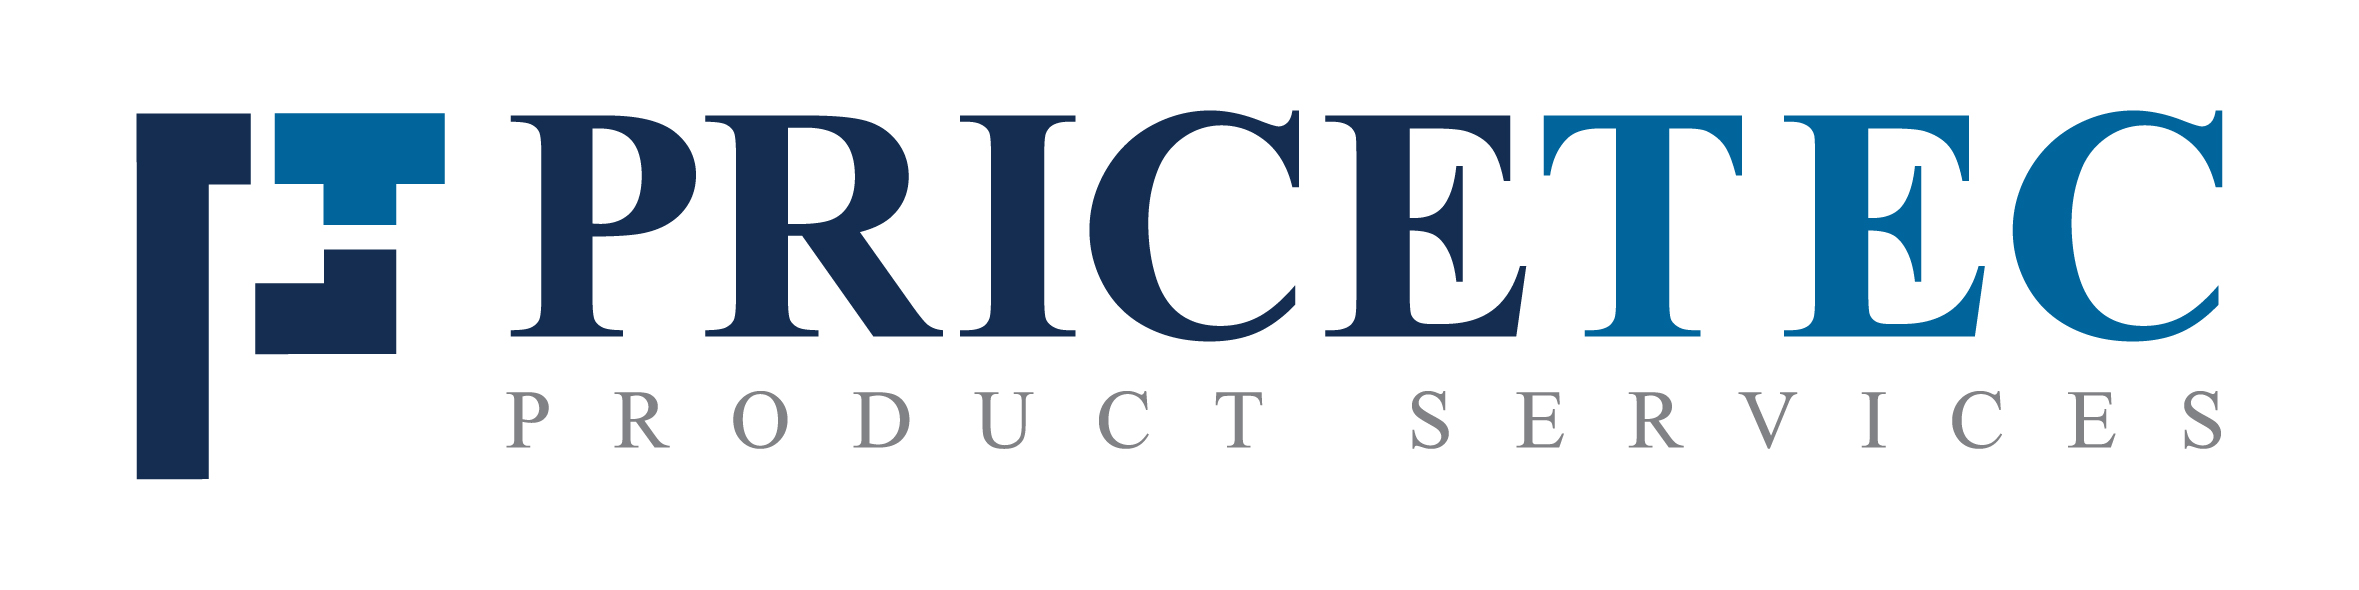 PriceTec Product Services Ltd.